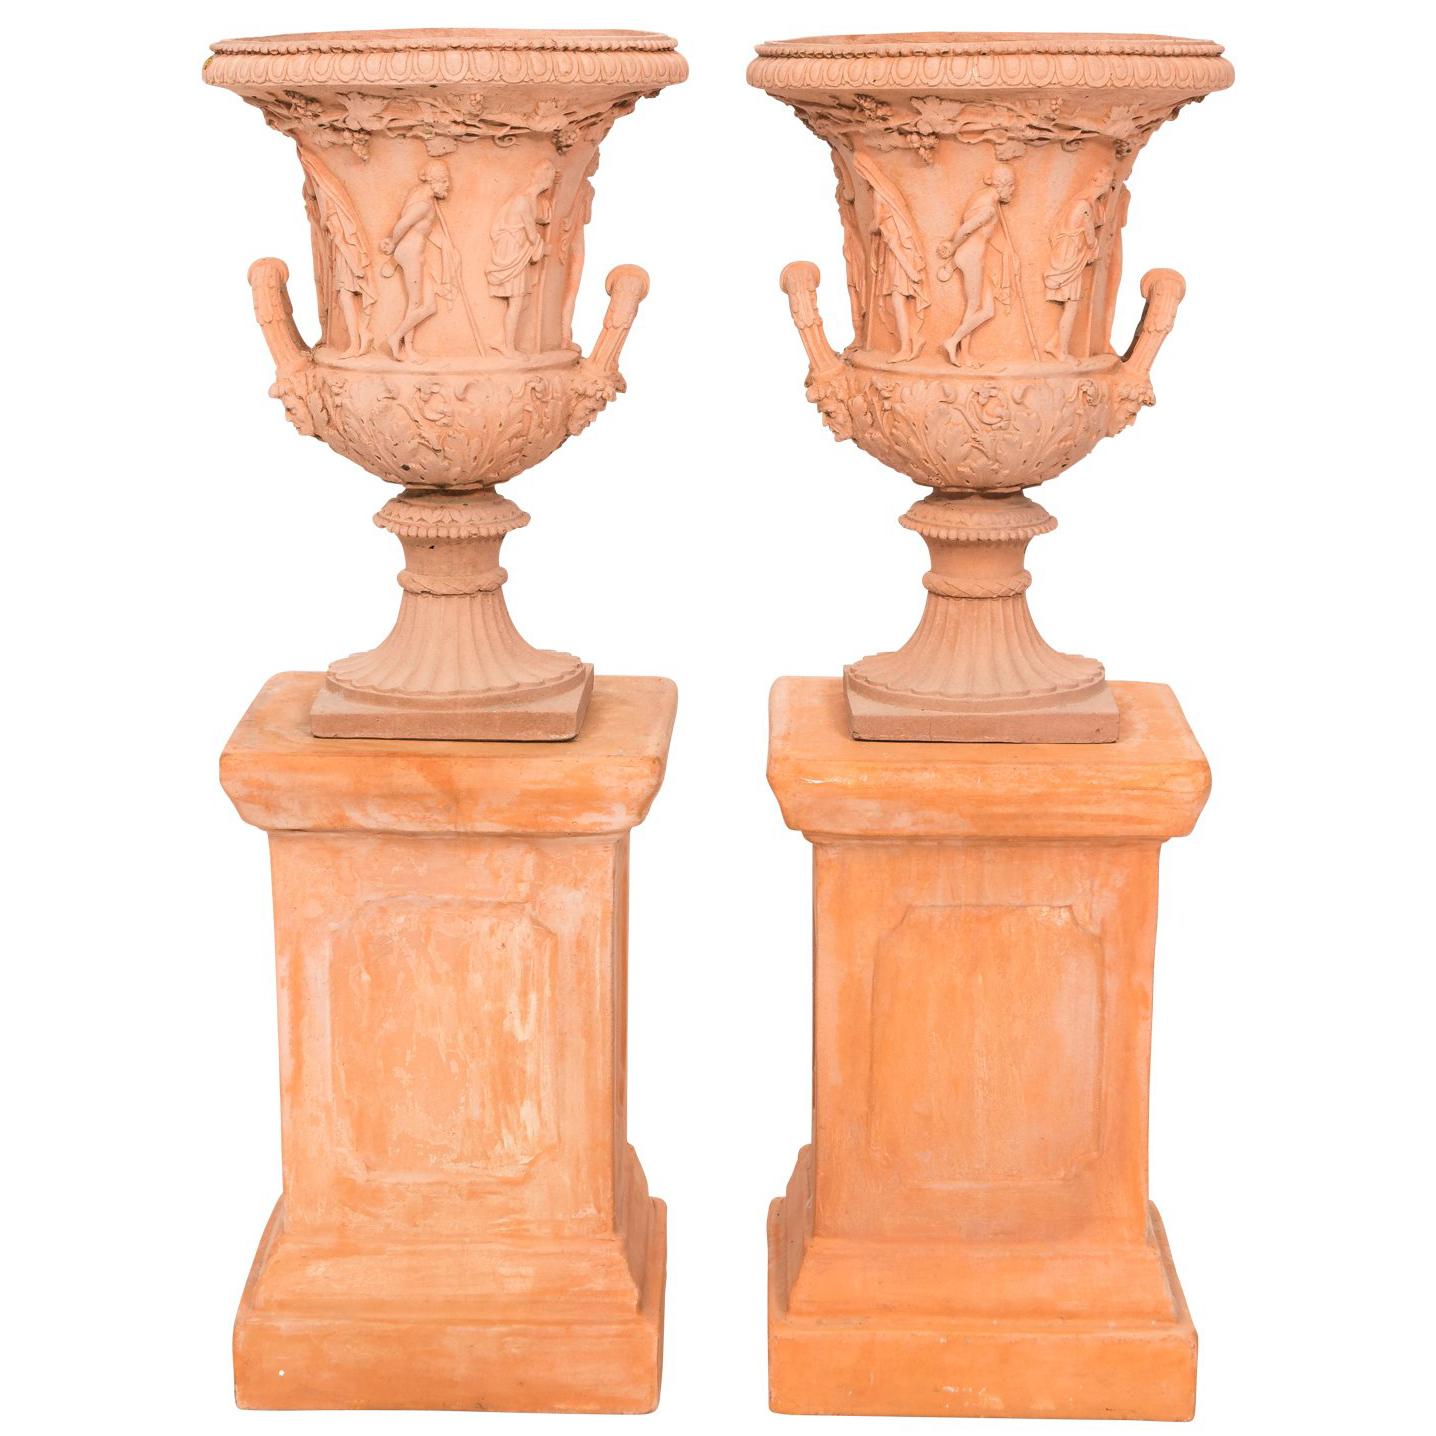 Pair of Neoclassical Terracotta Urns